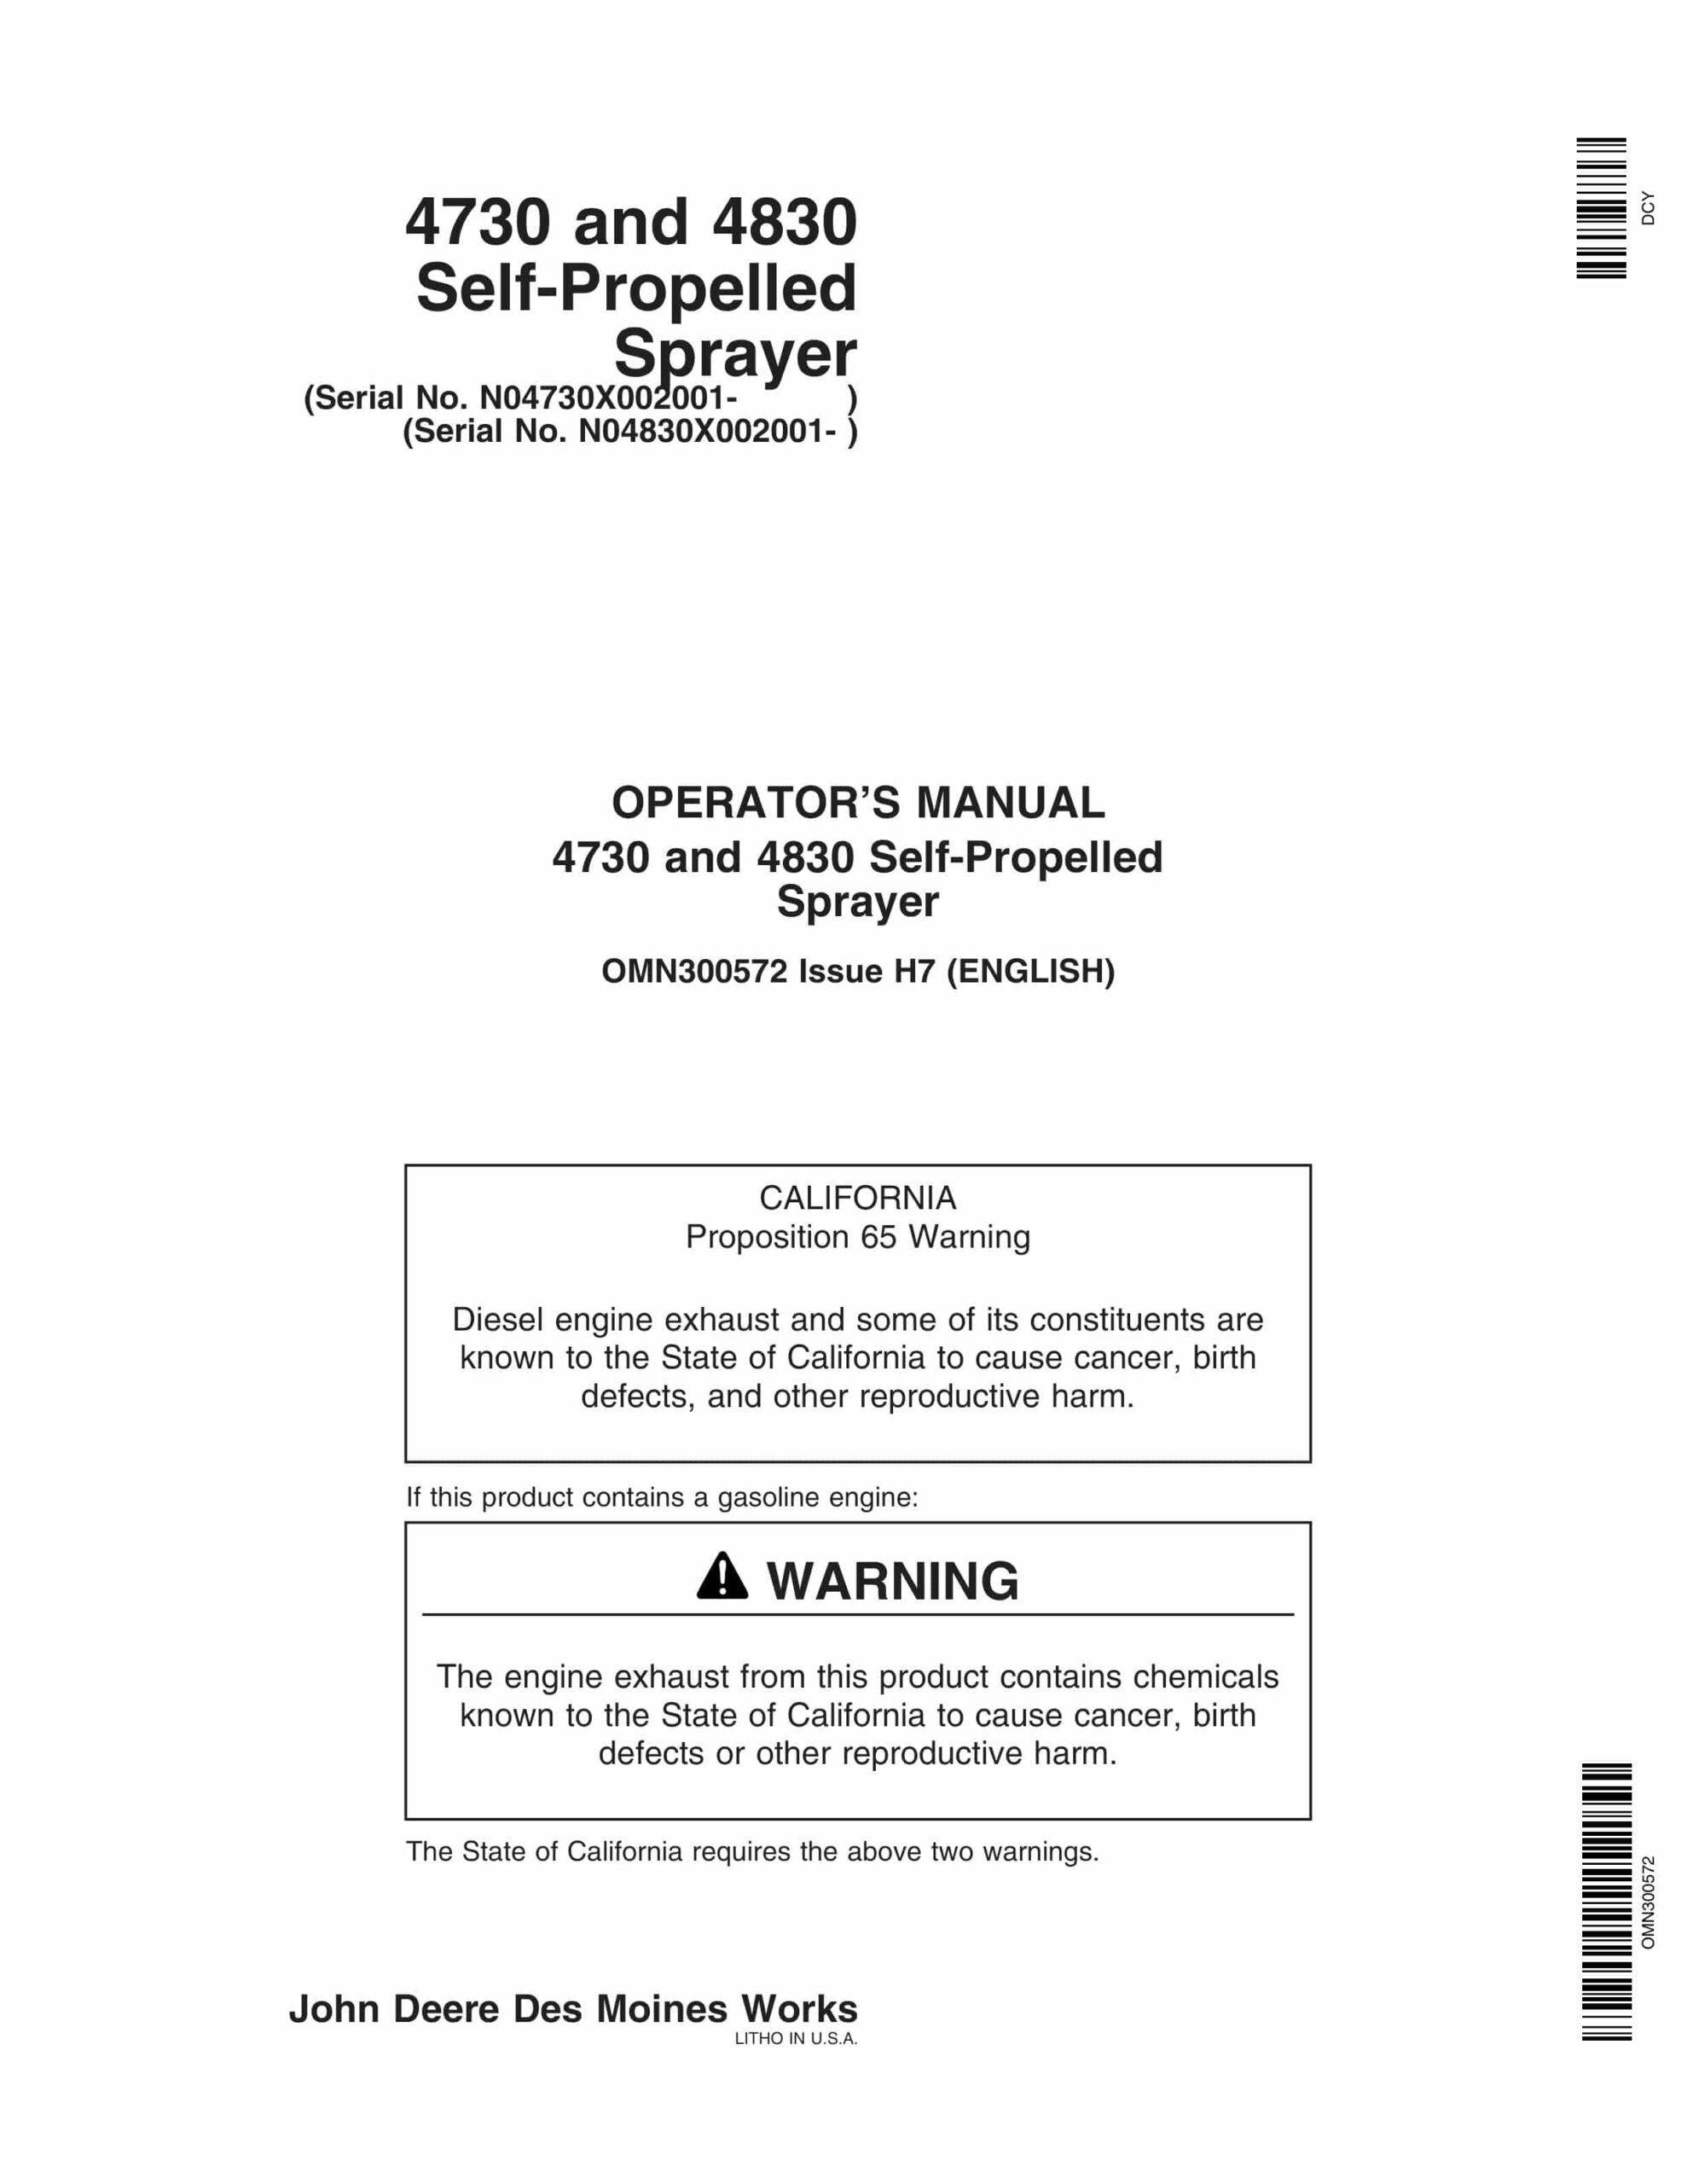 John Deere 4730 and 4830 Self-Propelled Sprayer Operator Manual OMN300572-1